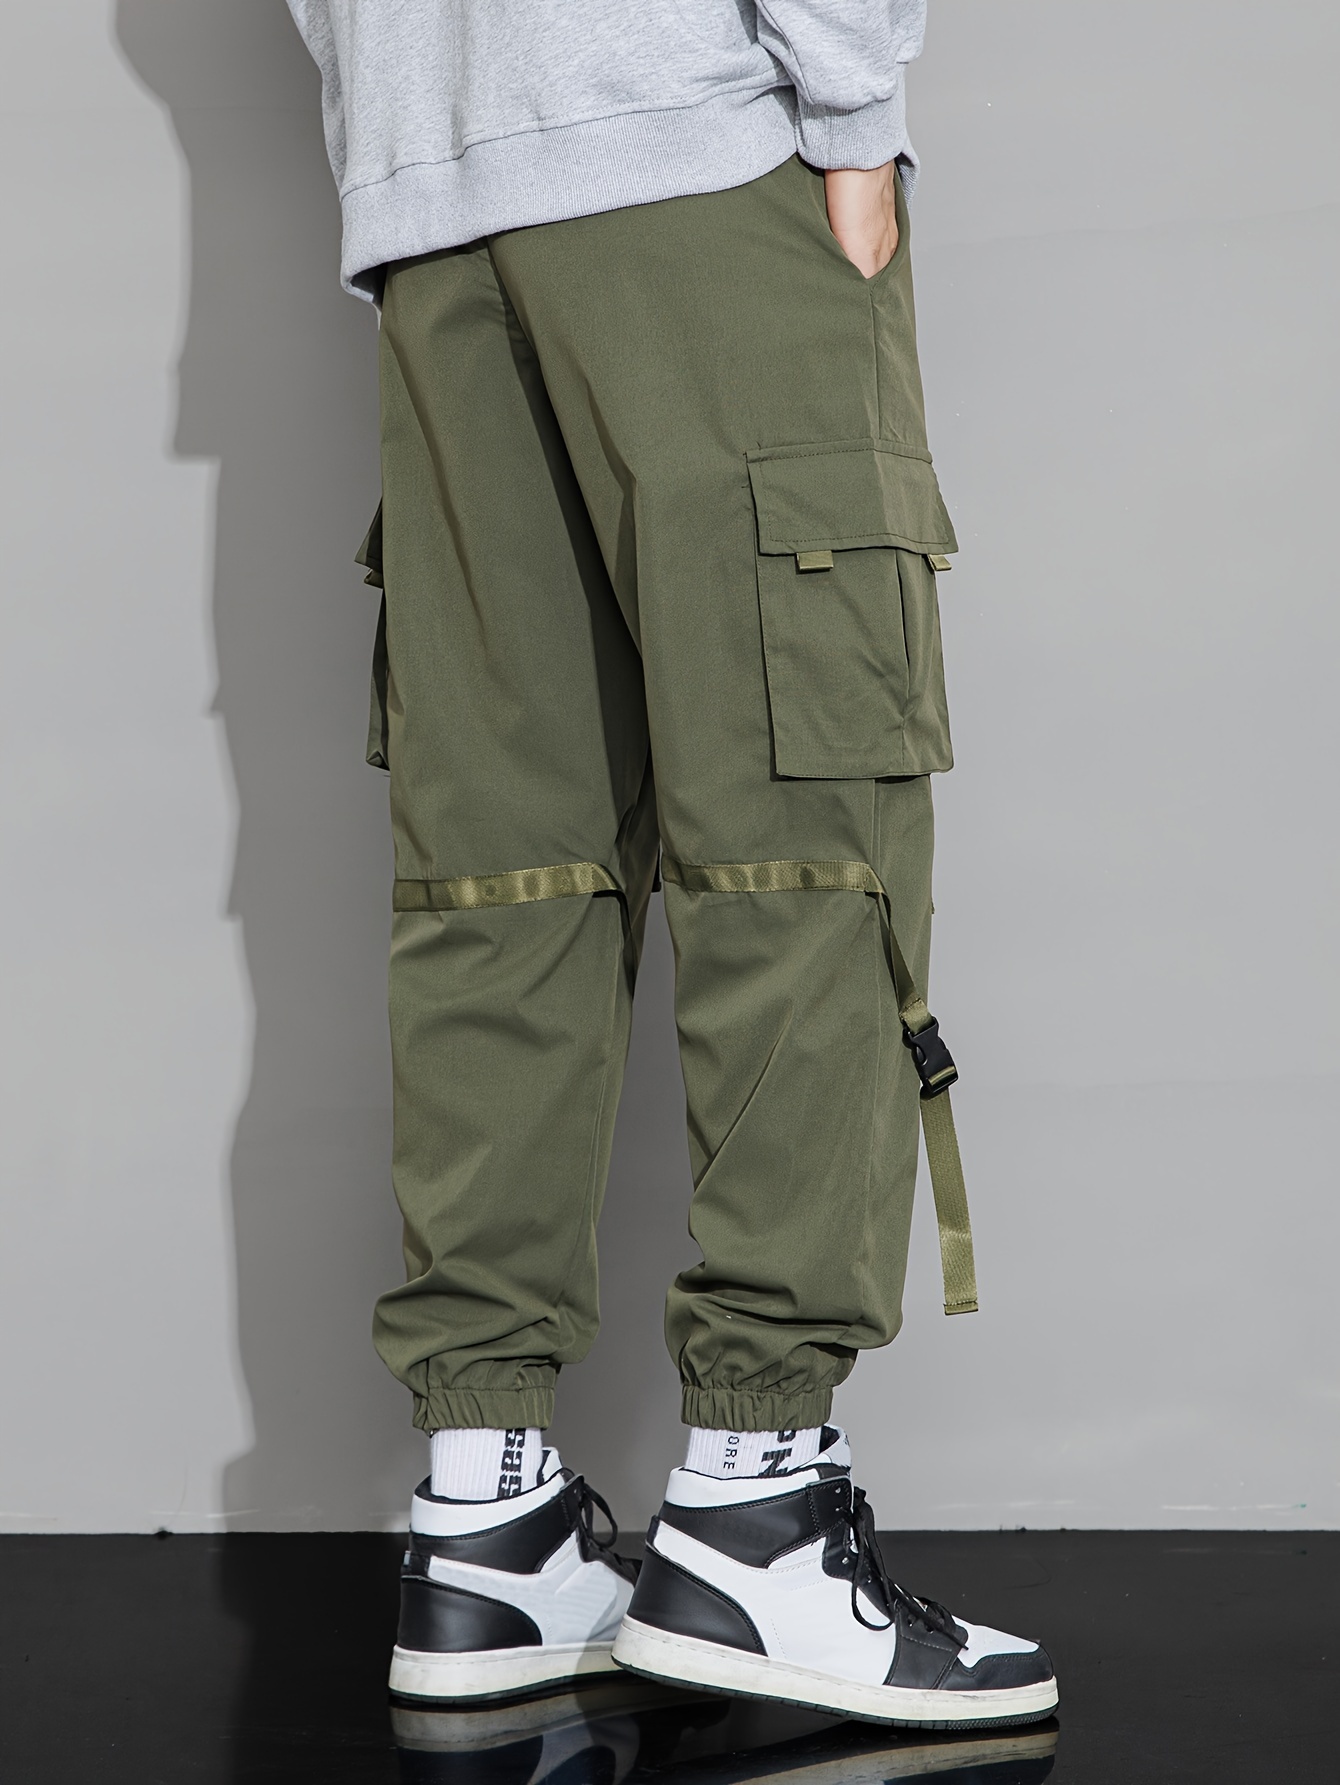 Jogger Pant Design For Girls Army Print Pants Design 2021